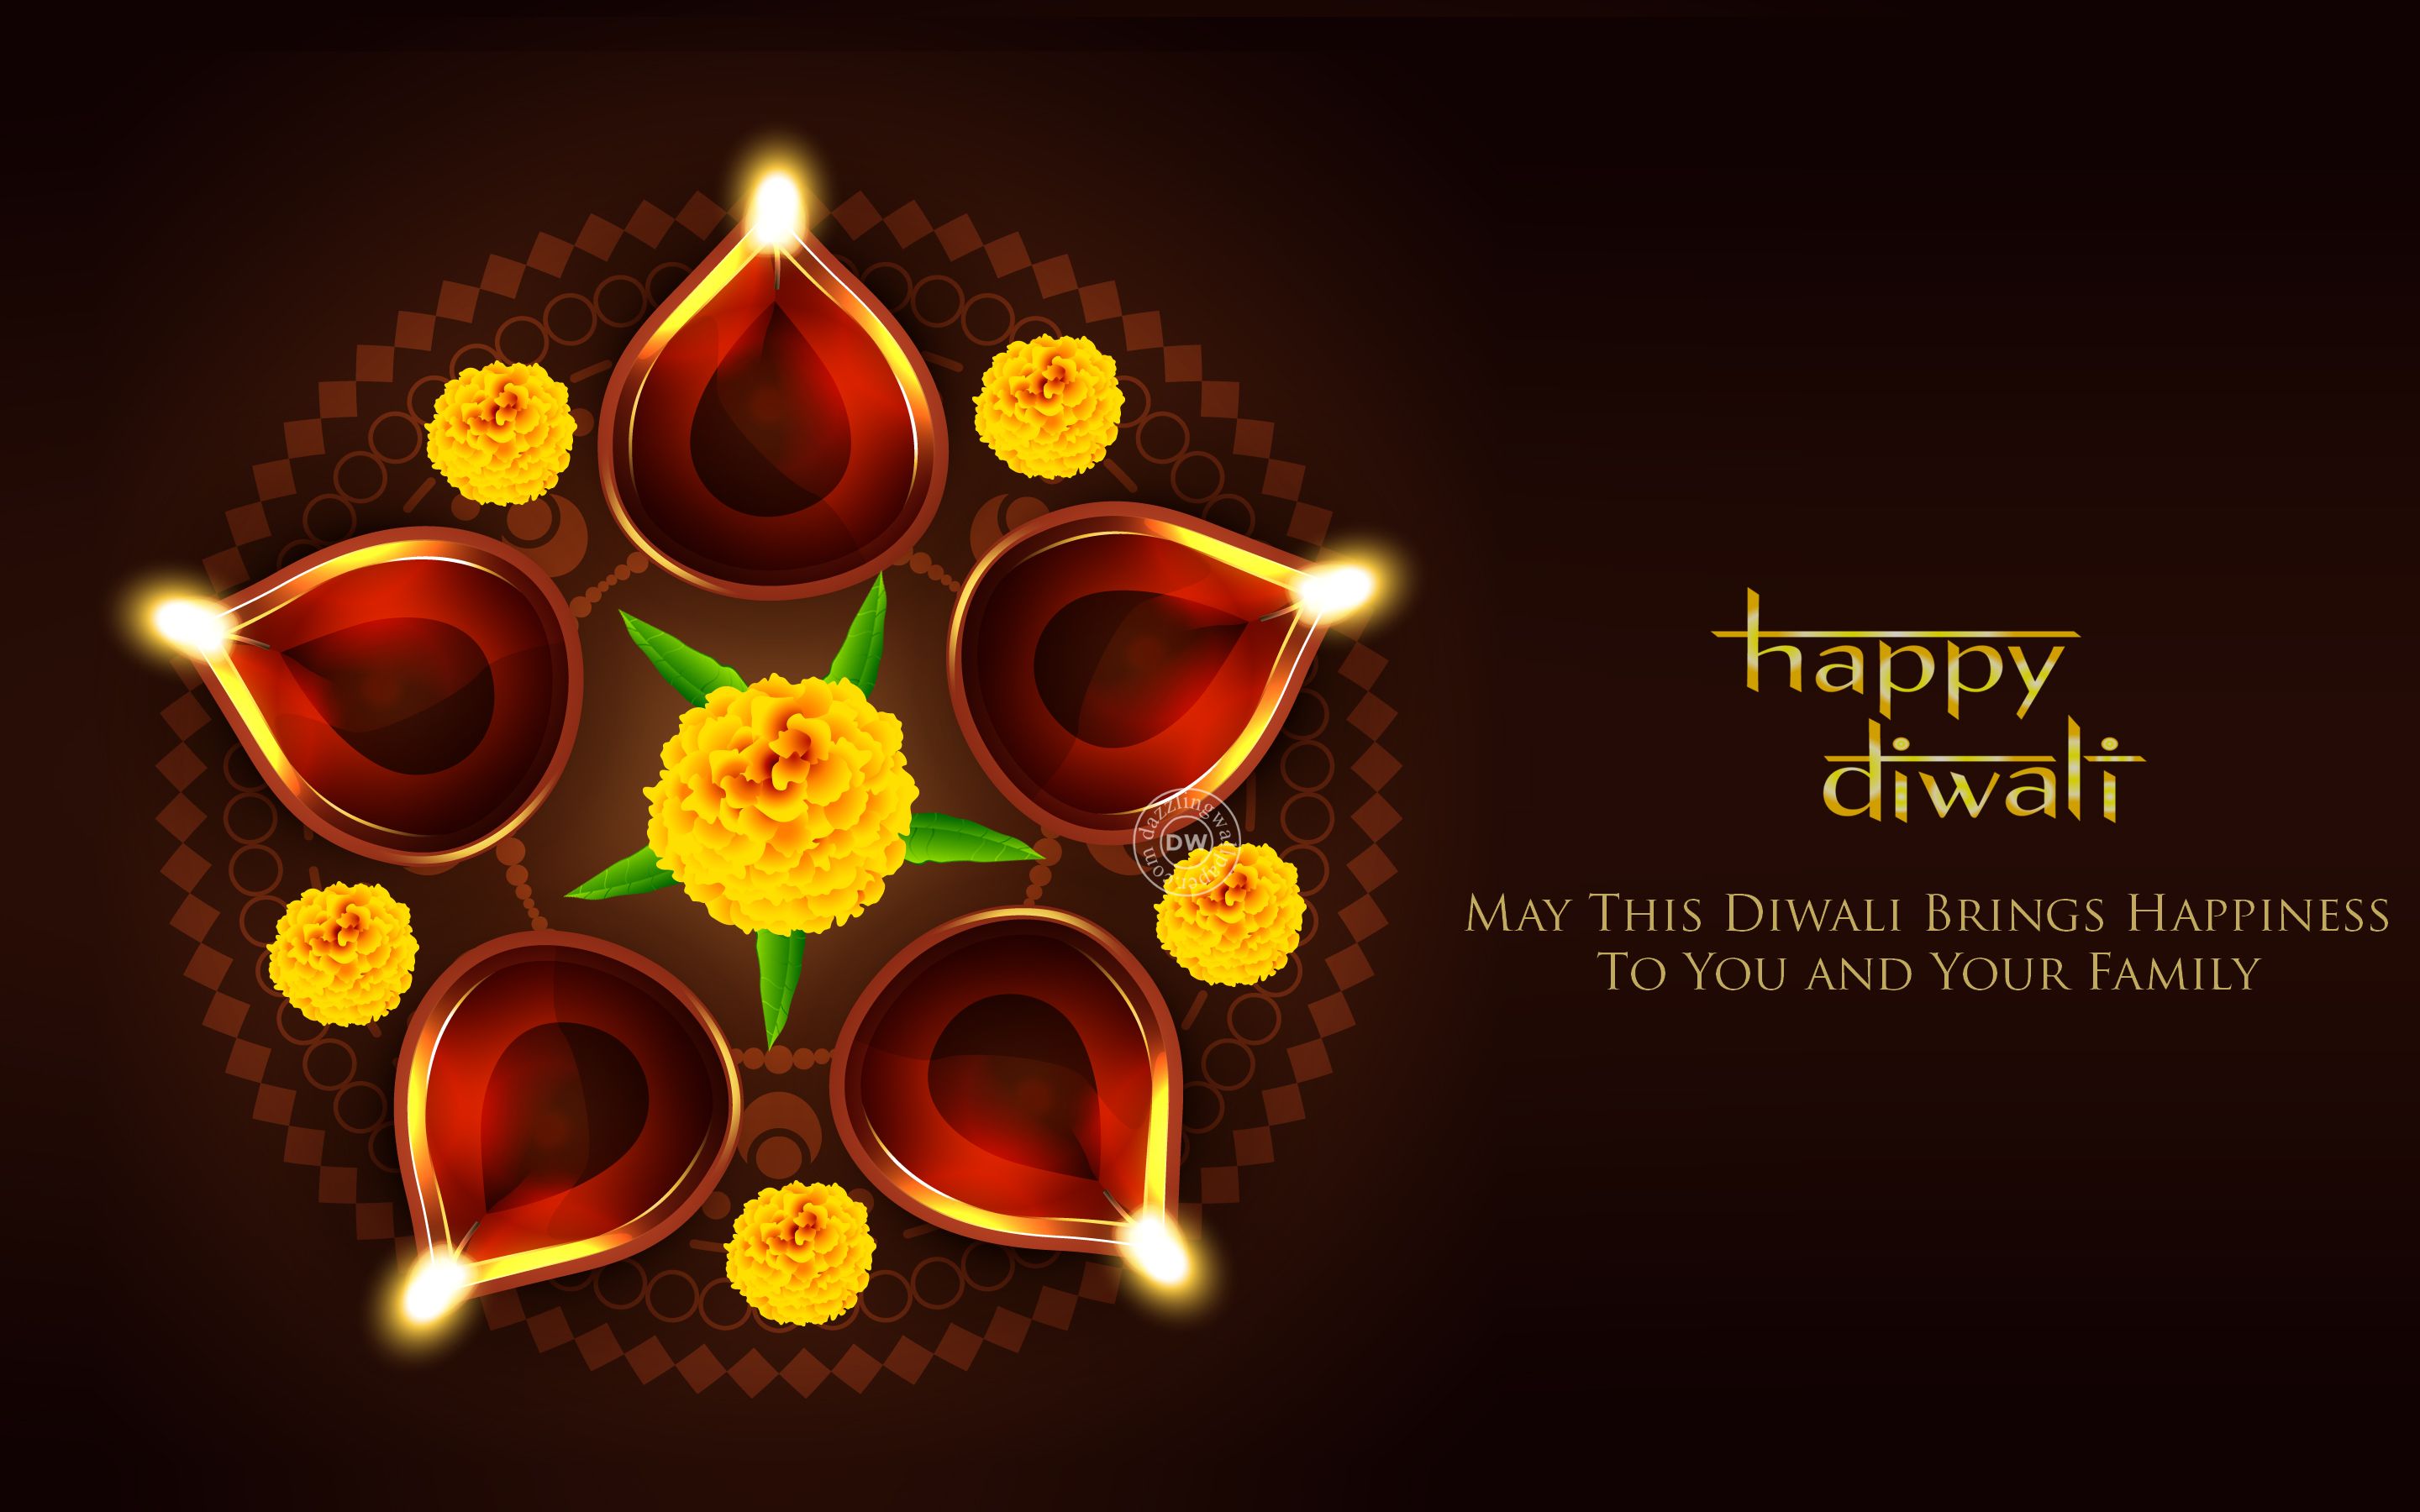 Diwali Images In Hindi Download - 2880x1800 Wallpaper 